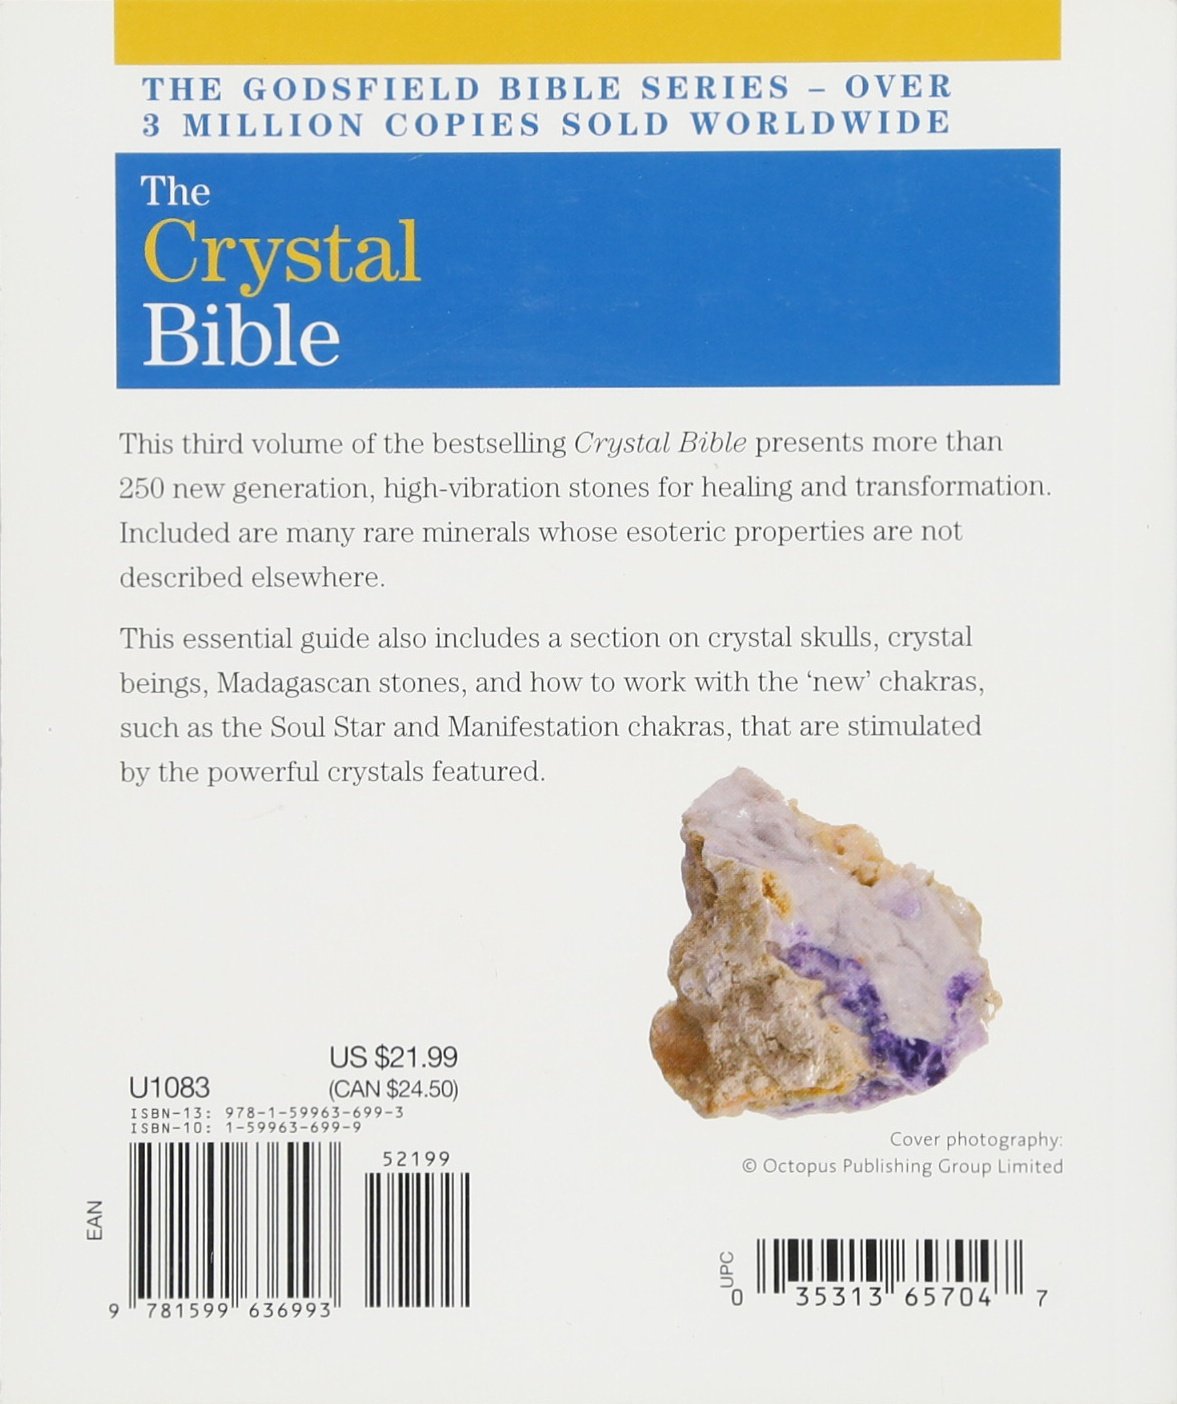 The Crystal Bible (The Crystal Bible Series): Hall, Judy: 9781582972404:  : Books